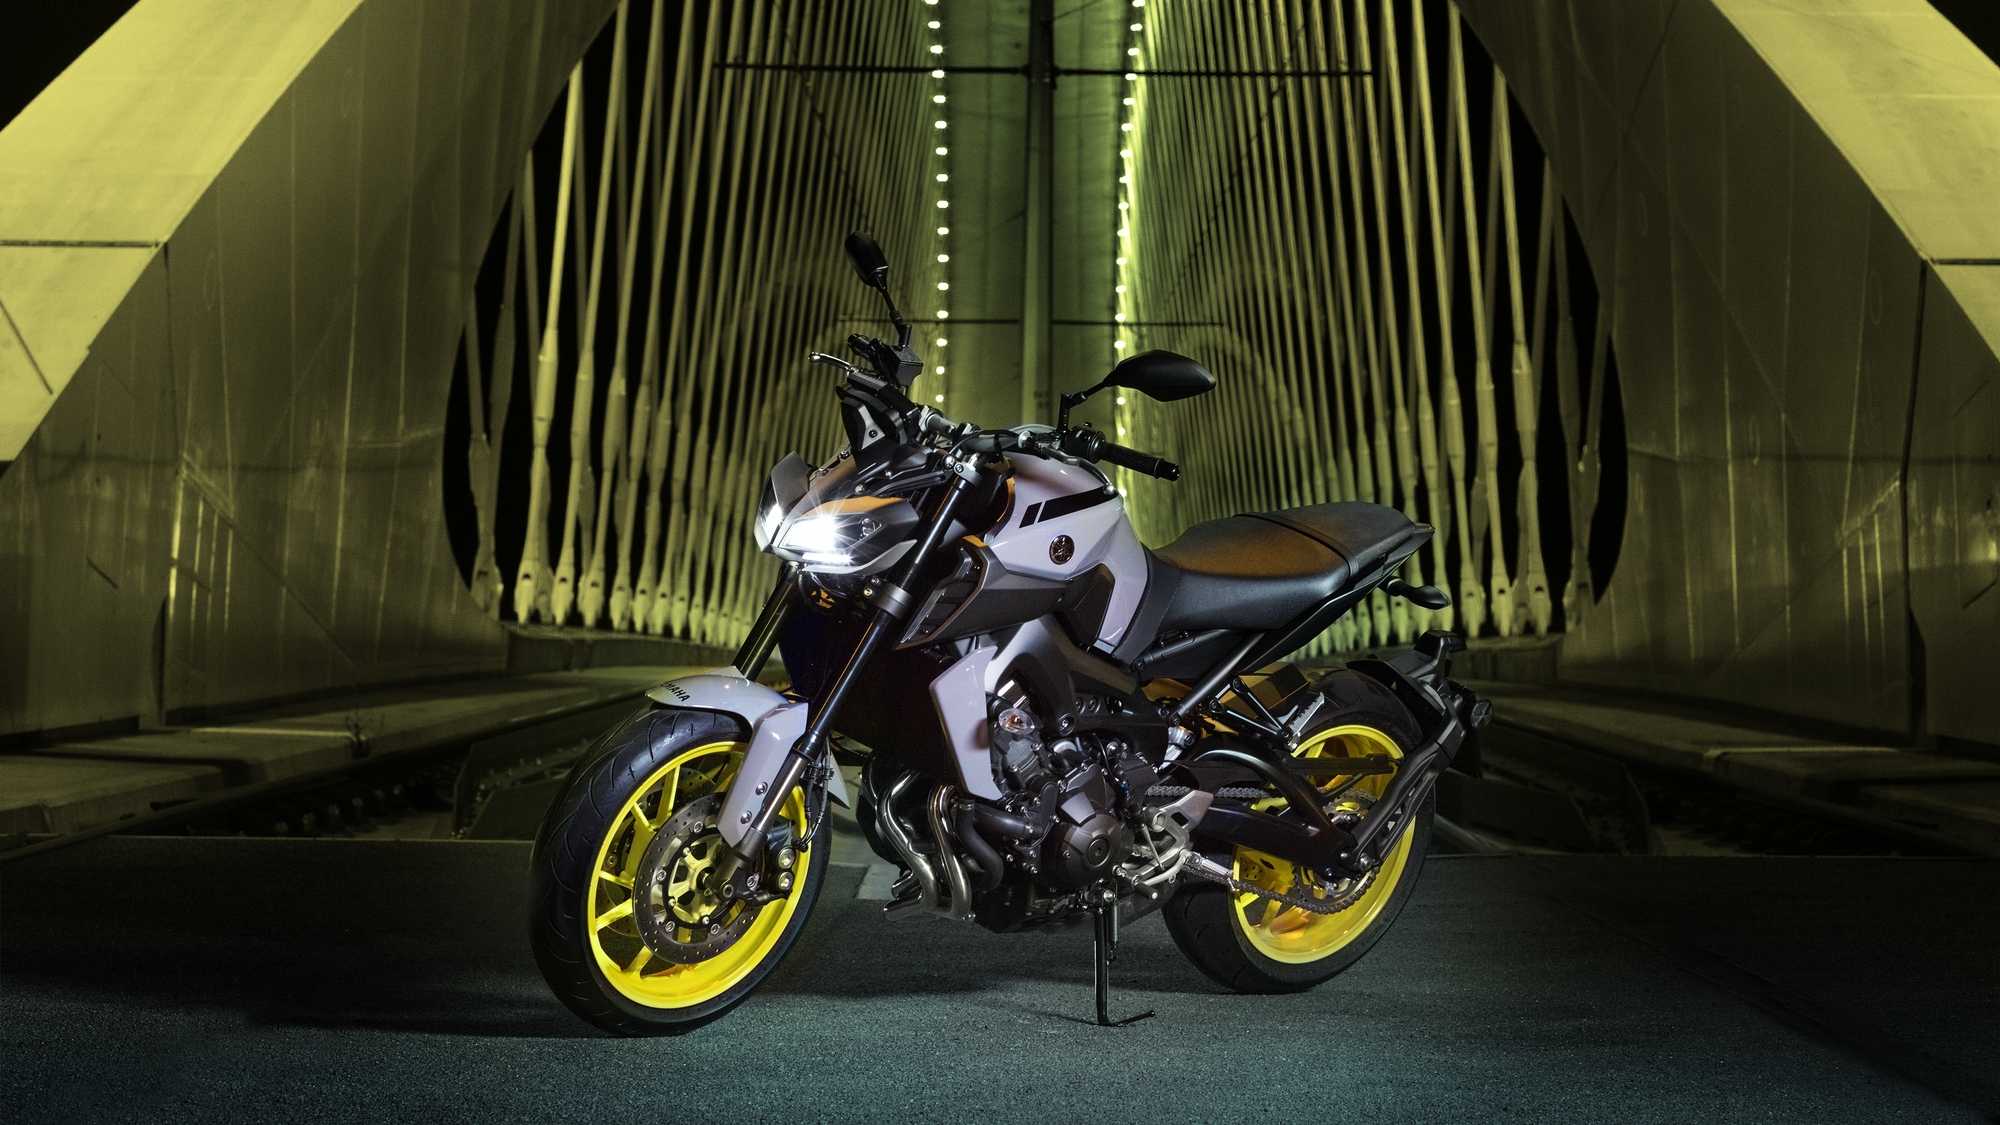 Yamaha-tracer.ru | сайт о мотоцикле yamaha mt09 tracer 900 (fj09)